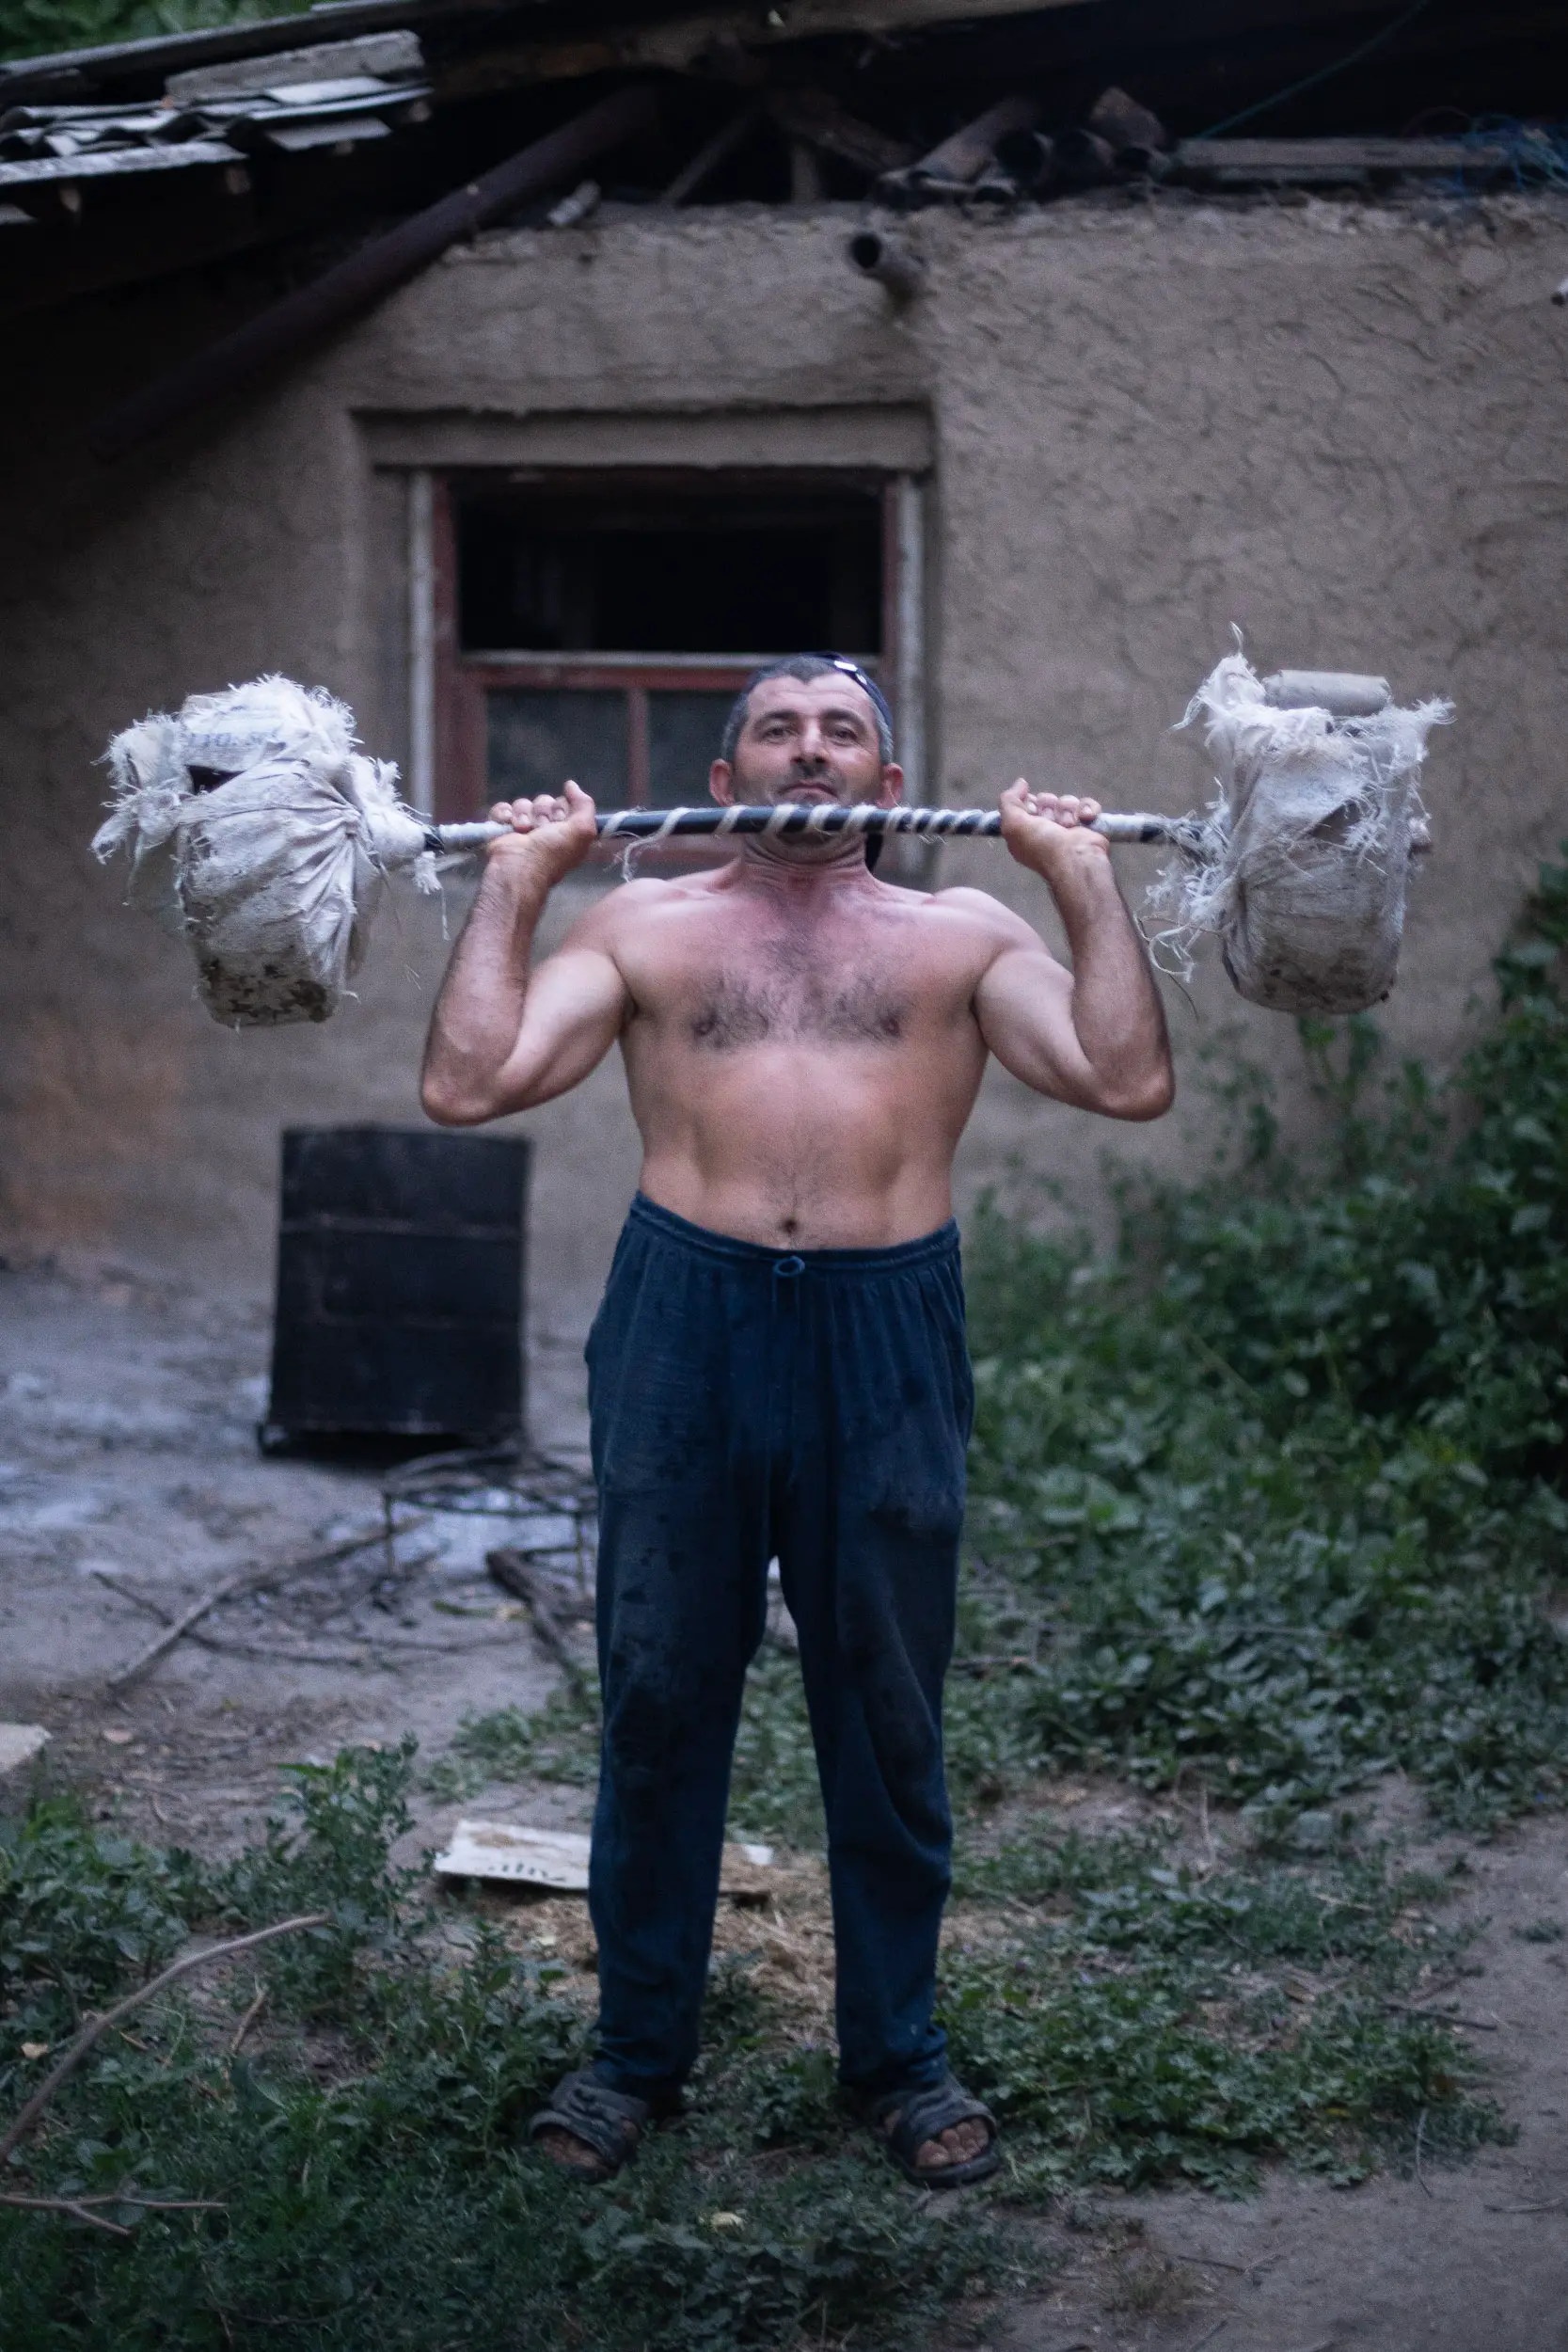 Azerbajiani man training